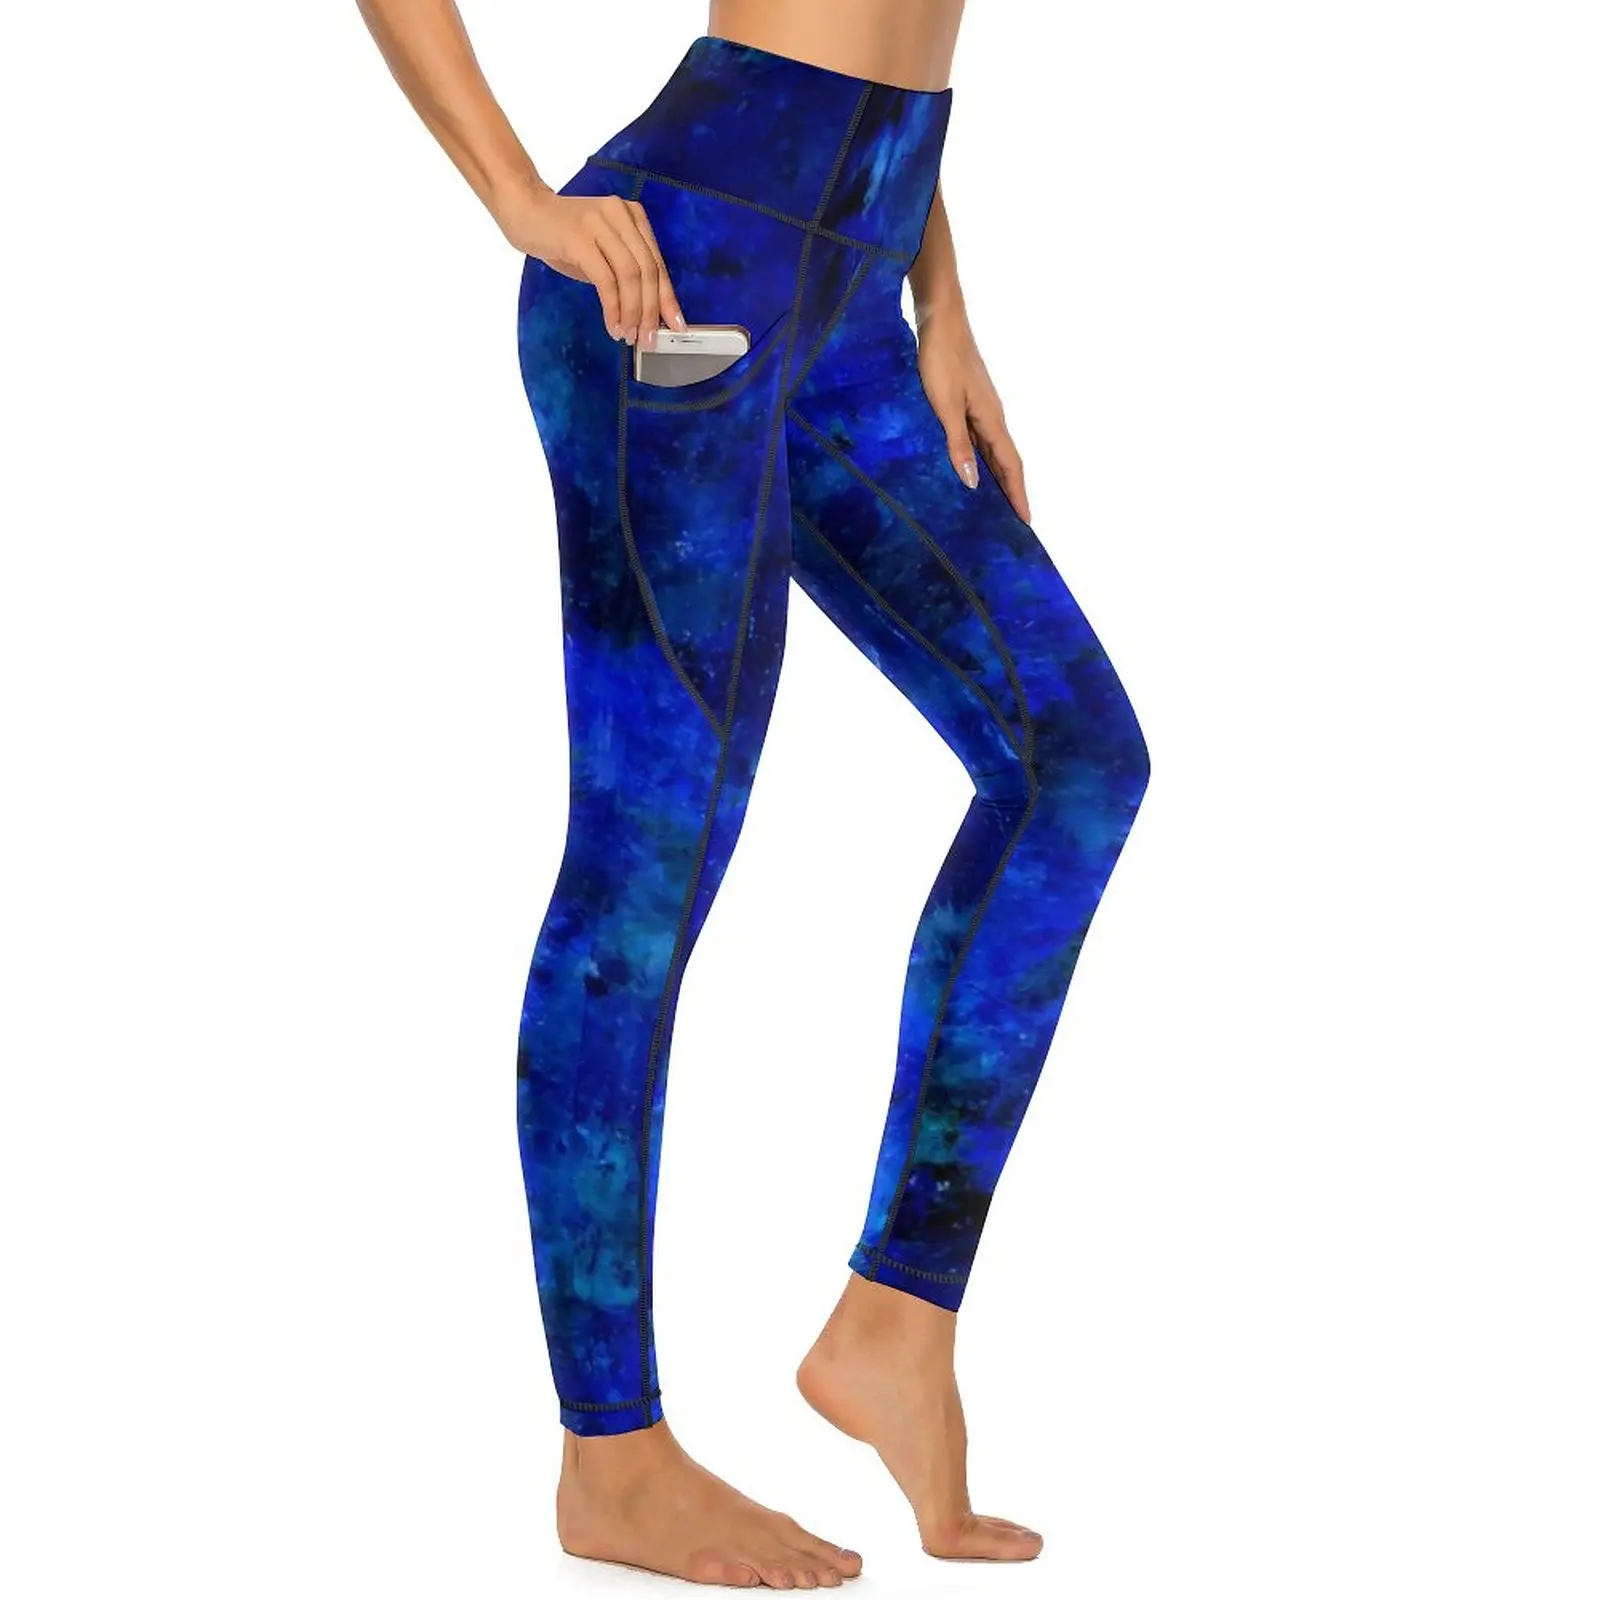 

Blue Paint Splatter Leggings Sexy Abstract Print Fitness Yoga Pants High Waist Stretch Sport Legging Pockets Fashion Leggins